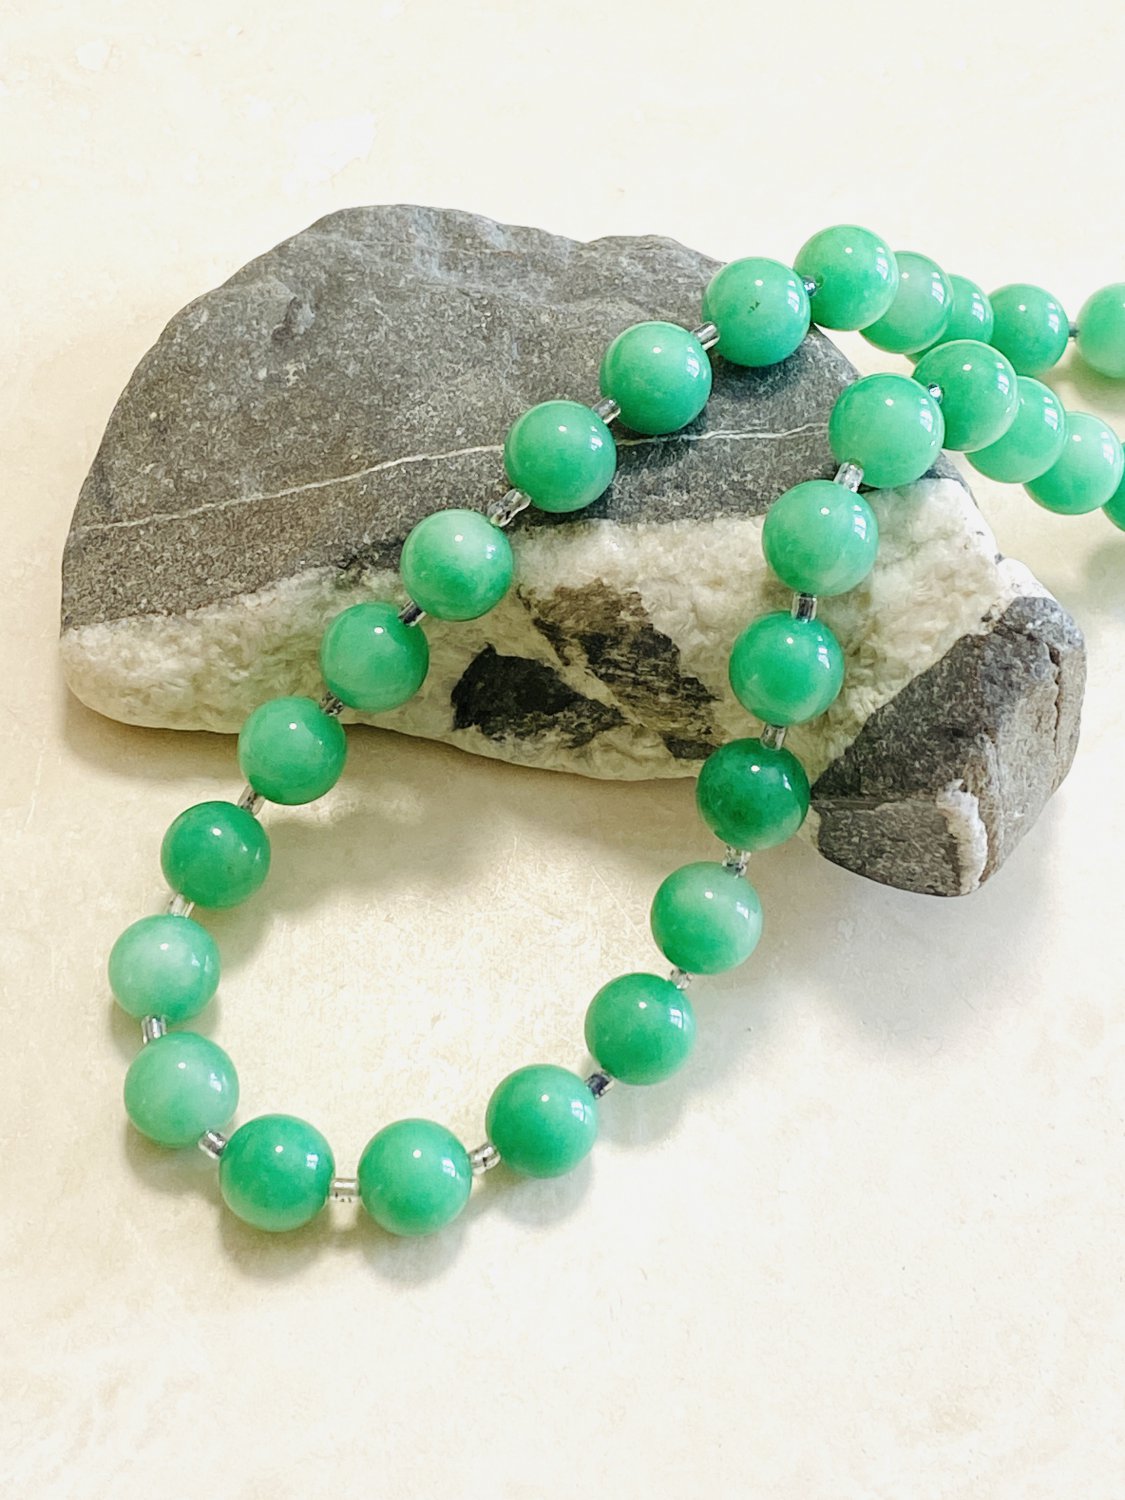 Green Chrysoprase Gemstone Beaded Necklace